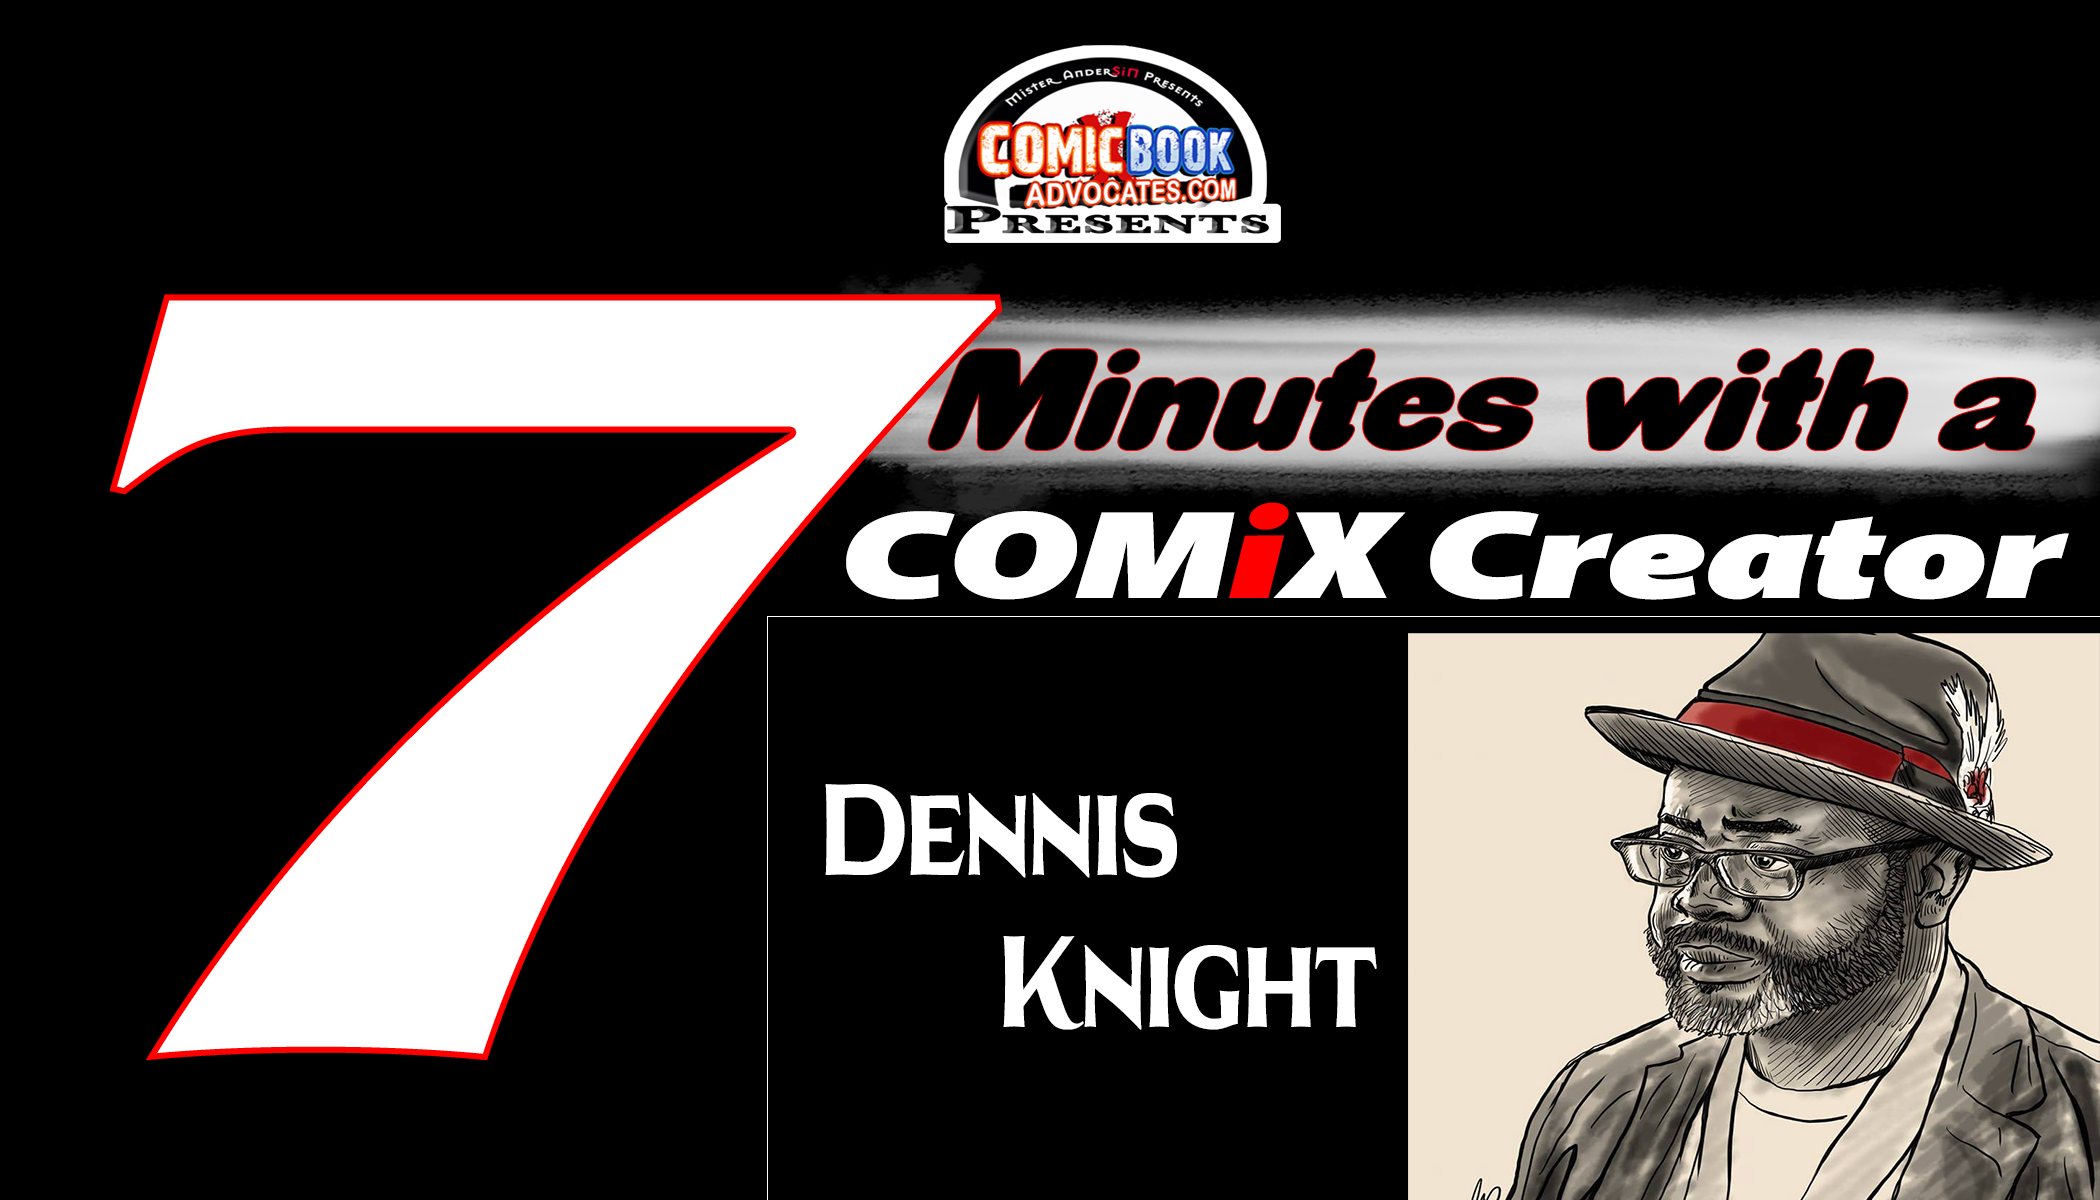 ComicBookADVOCATE.com Presents 7 mins with COMiX Creator: Dennis Knight